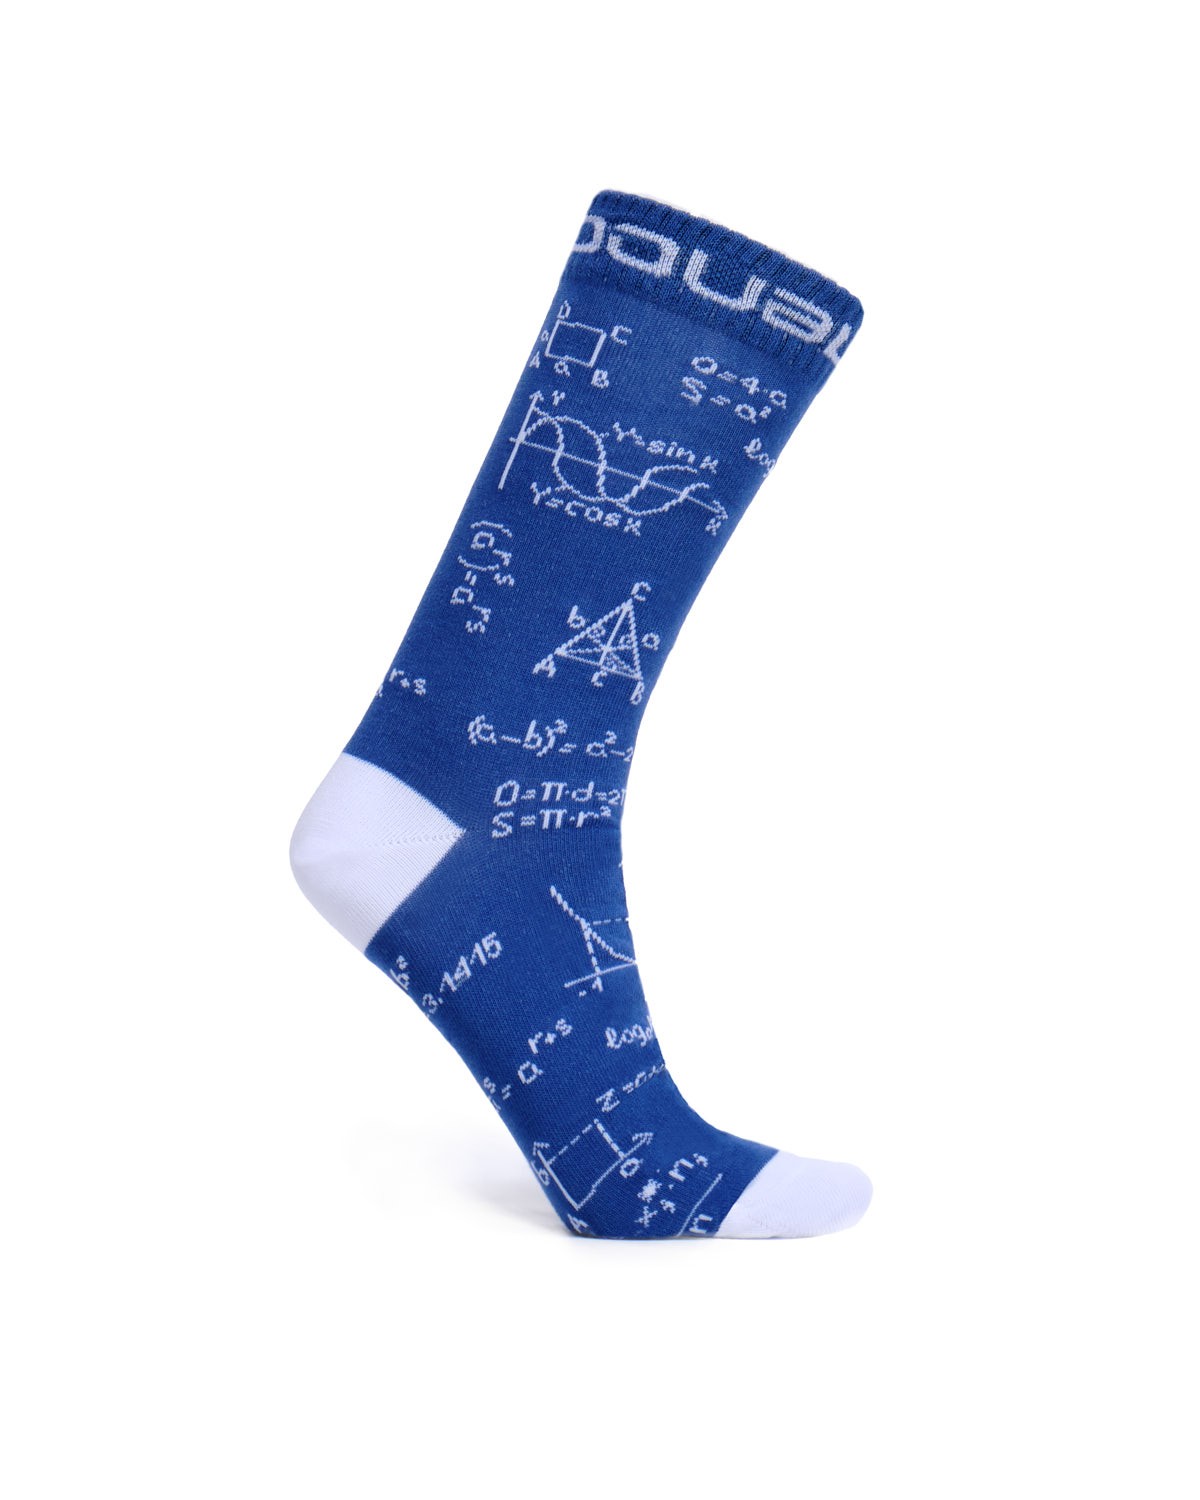 SMART Socks Blue